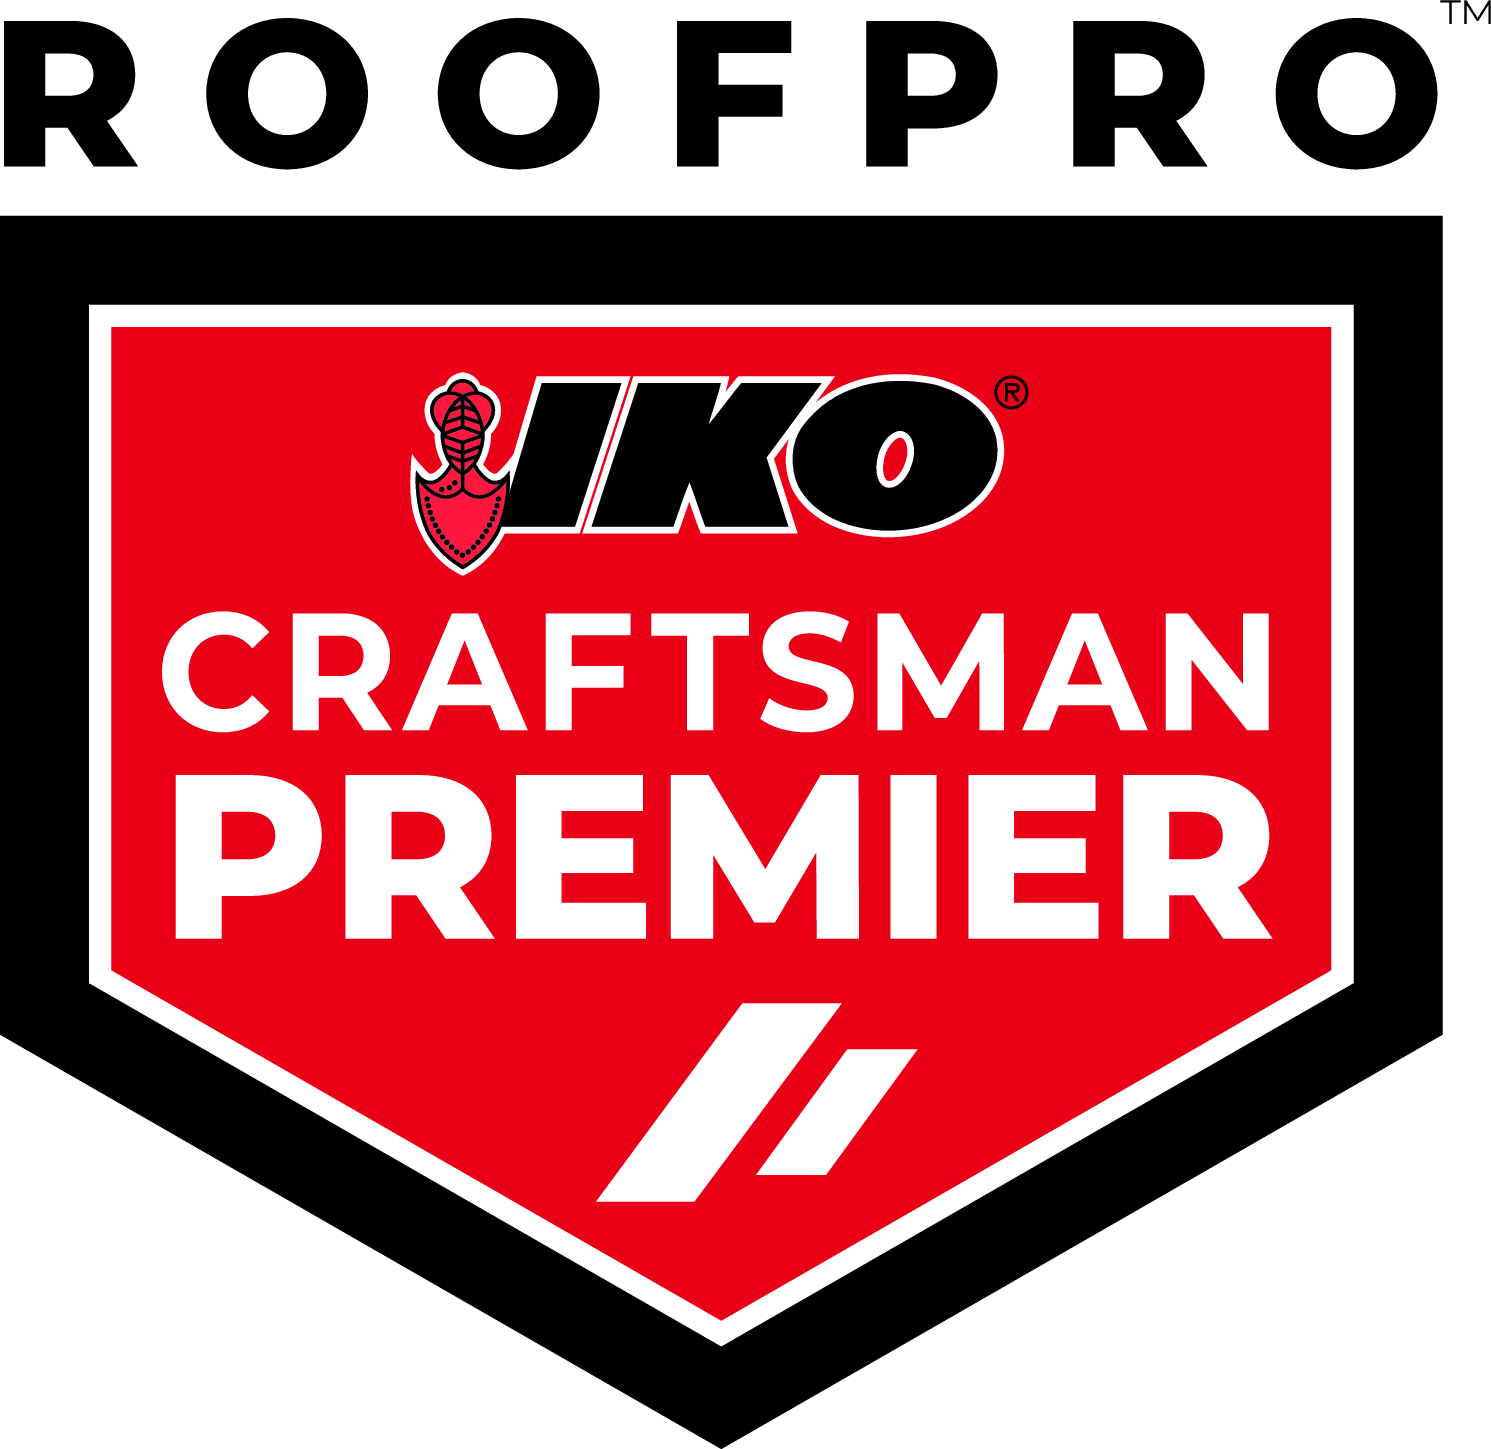 IKO Roof pro craftsman premier Edmonton, AB